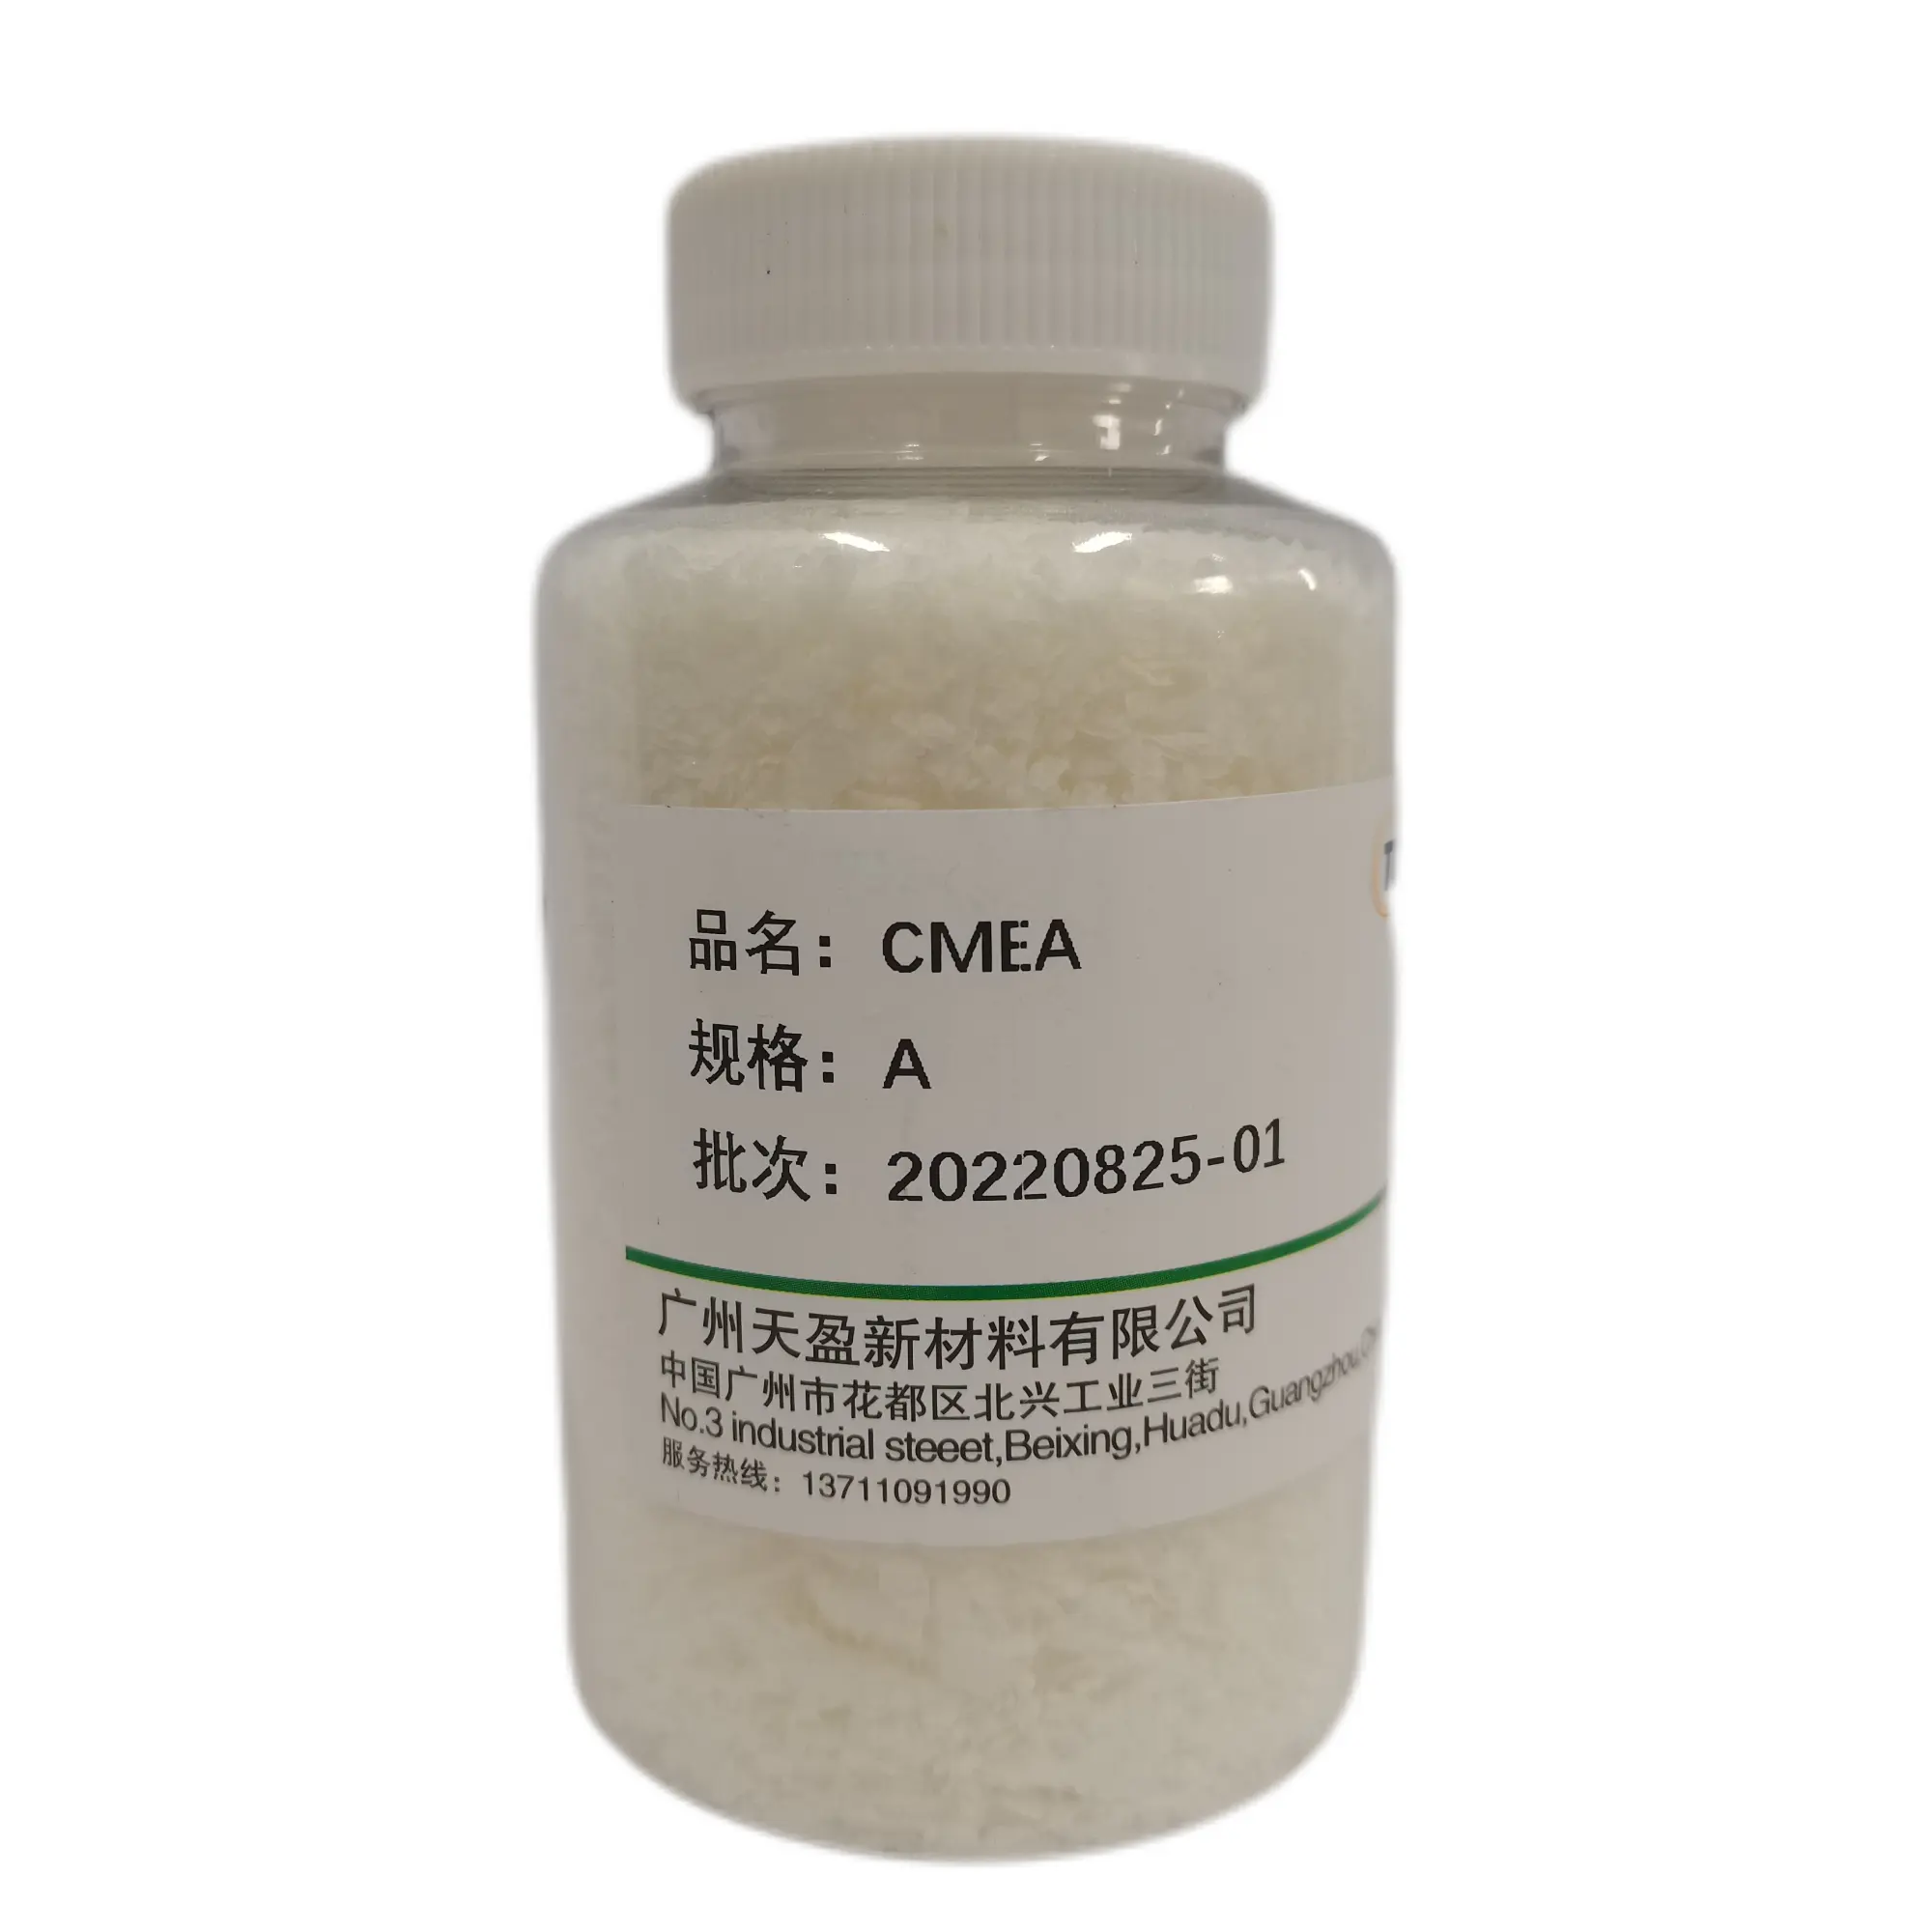 منظفات ، عامل سميك ، عامل رغوي CMEA Cocamide مونوإيثانولومين كوكاميد MEA CAS 68140-00-1 لجل من أجل جل-1